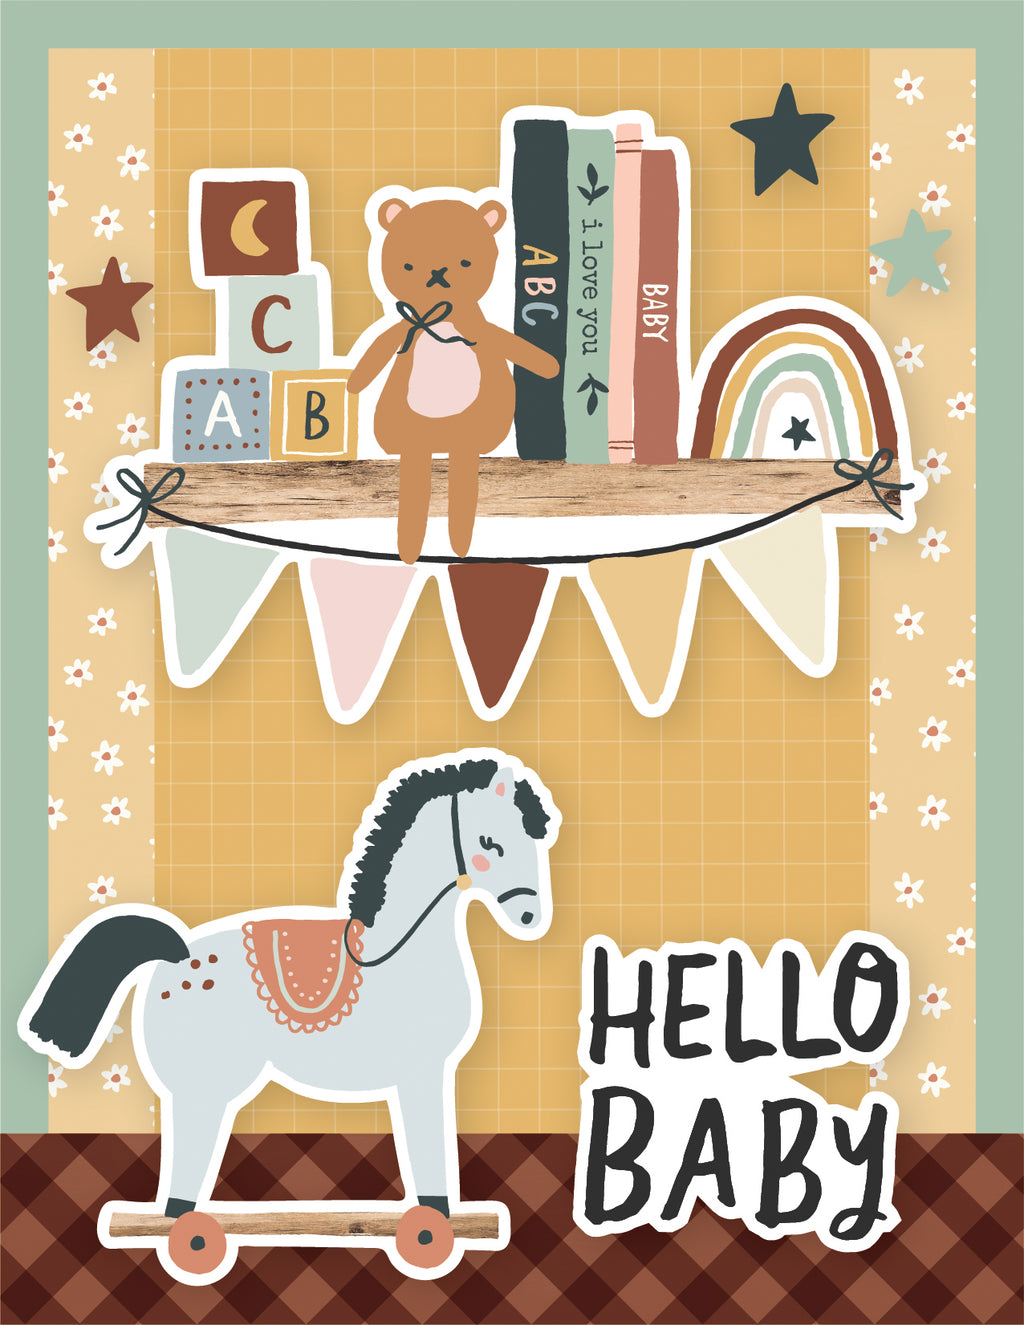 Boho Baby - Simple Cards Card Kit